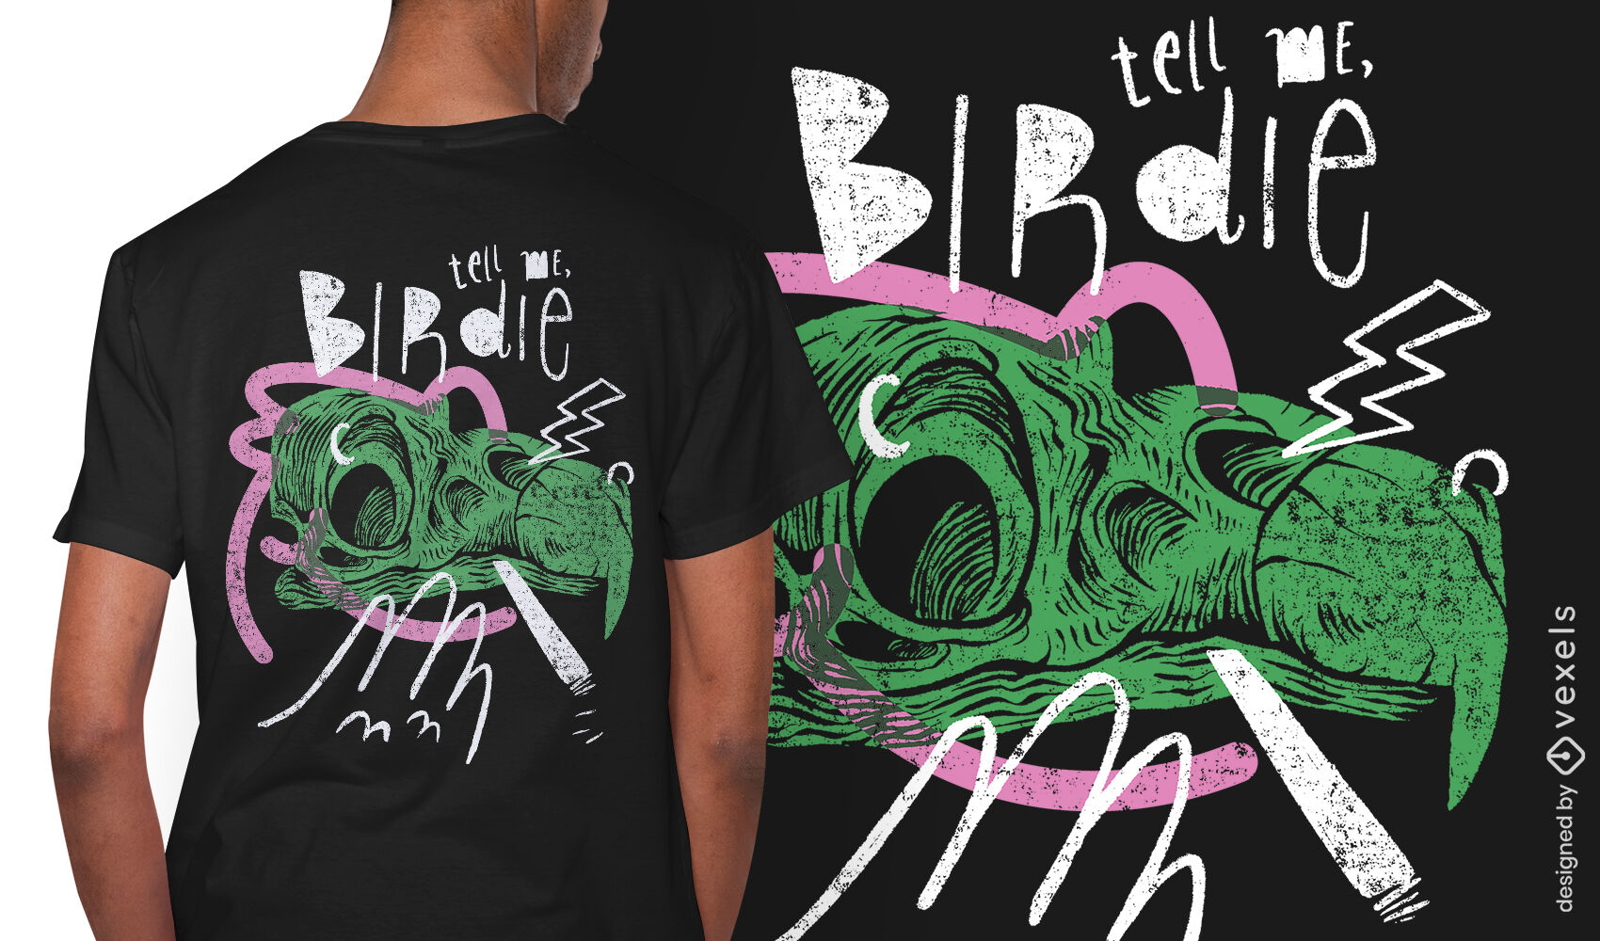 Bird skull quote t-shirt design